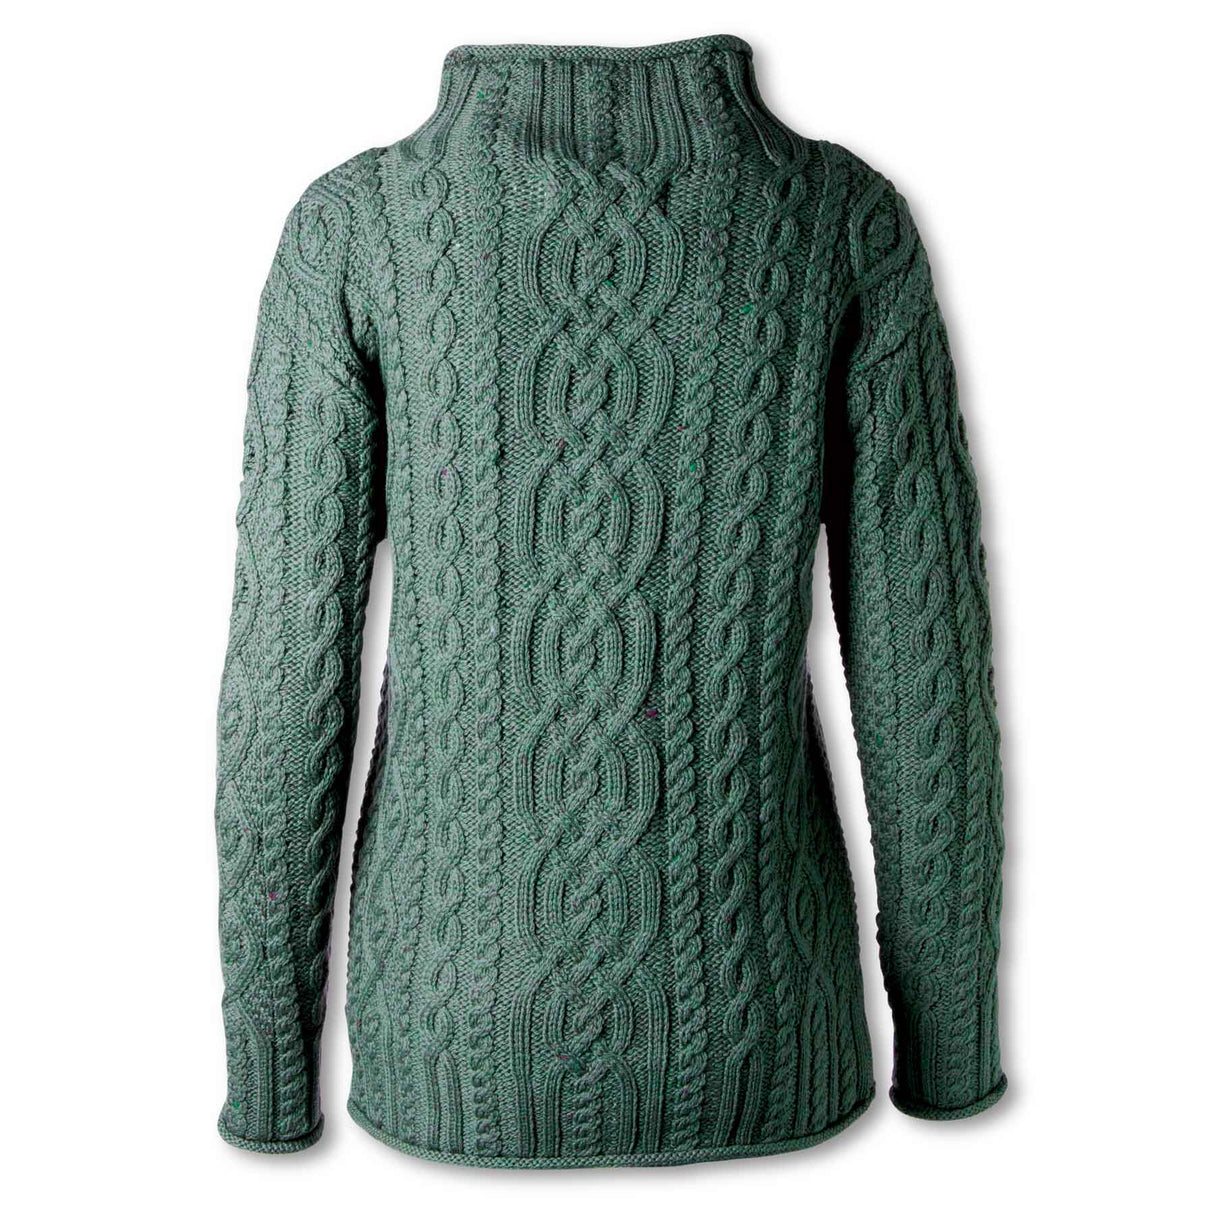 Aran Knit Mock neck Sweater, Tundra - Creative Irish Gifts